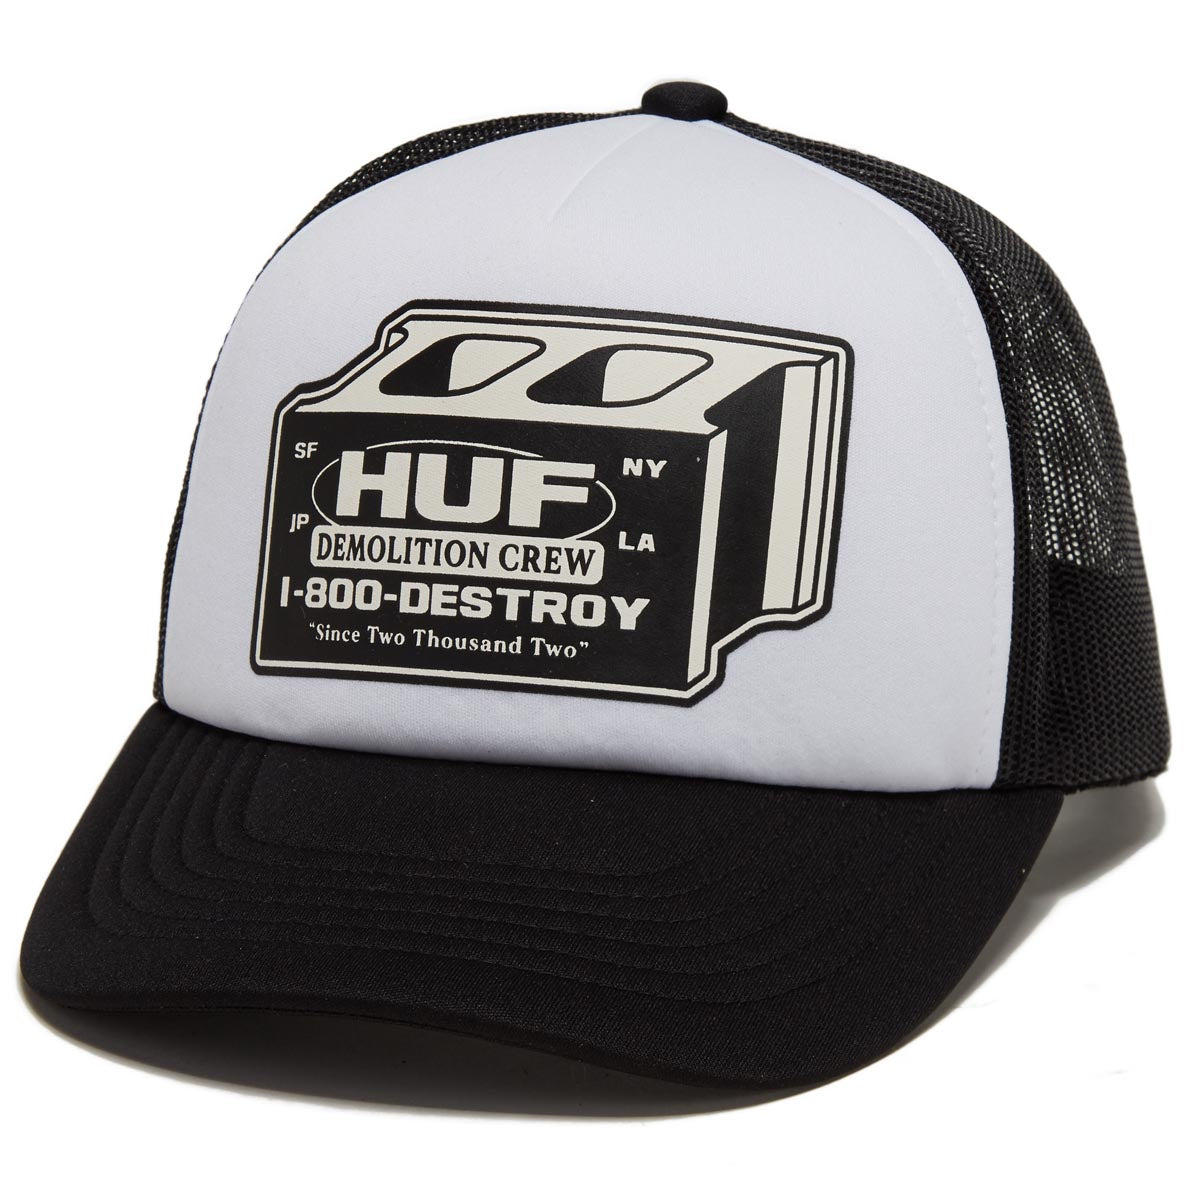 HUF Demolition Crew Trucker Hat - Black image 1